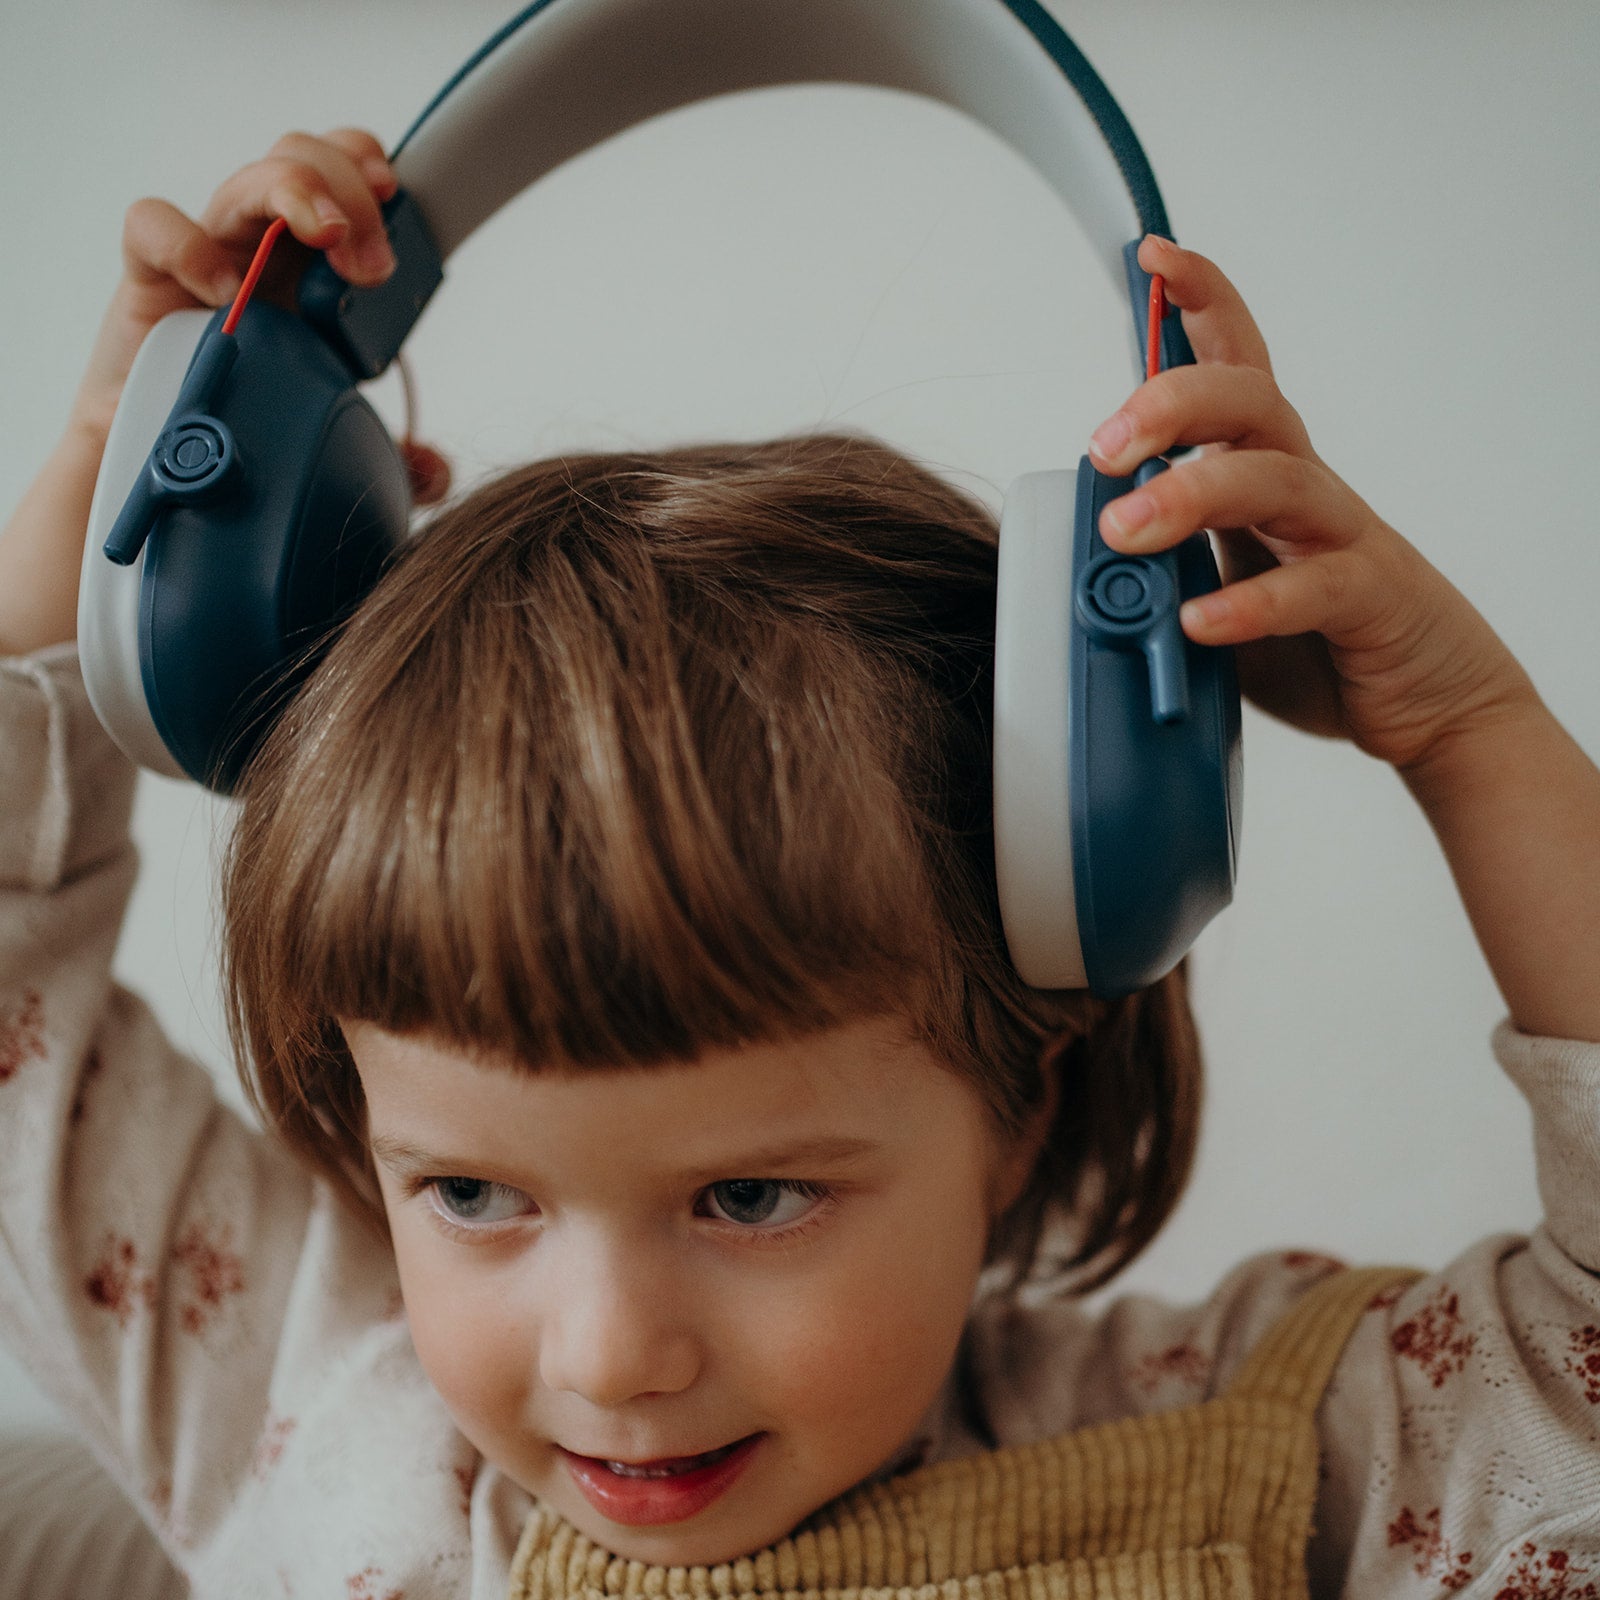 Kidywolf - KIDYNOISE Noise cancling headphones blue - Playlaan